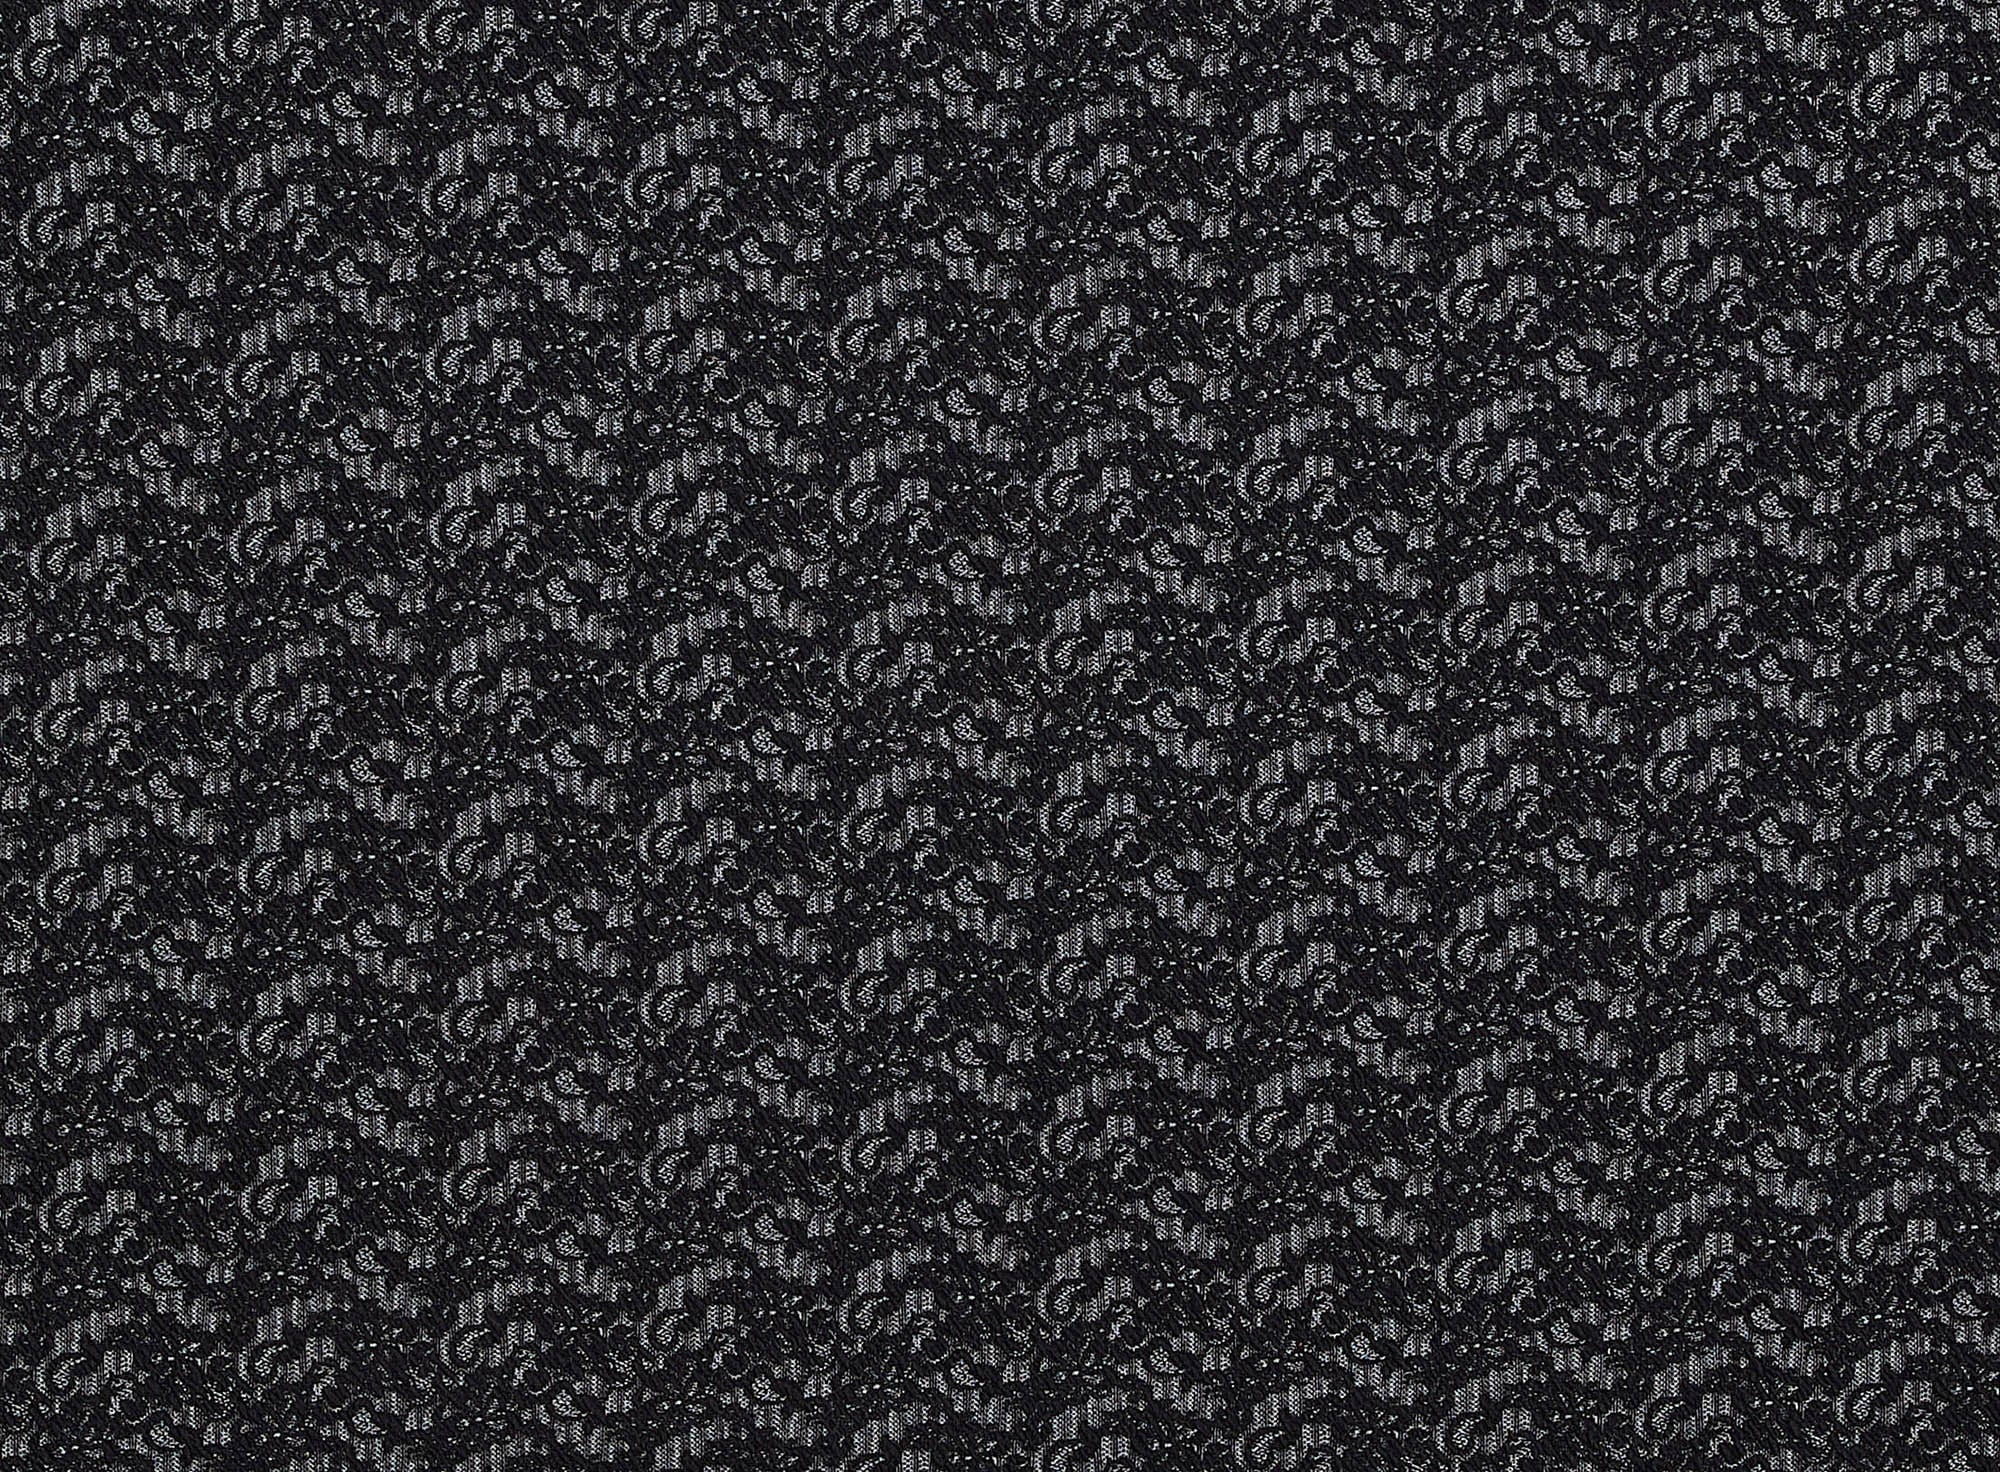 FabricLA Acrylic Felt Fabric - 72 Inch Wide 1.6mm Thick Felt by The Yard -  Use Felt Sheets for Sewing, Cushion and Padding, DIY Arts & Crafts - Green,  10 Yard 